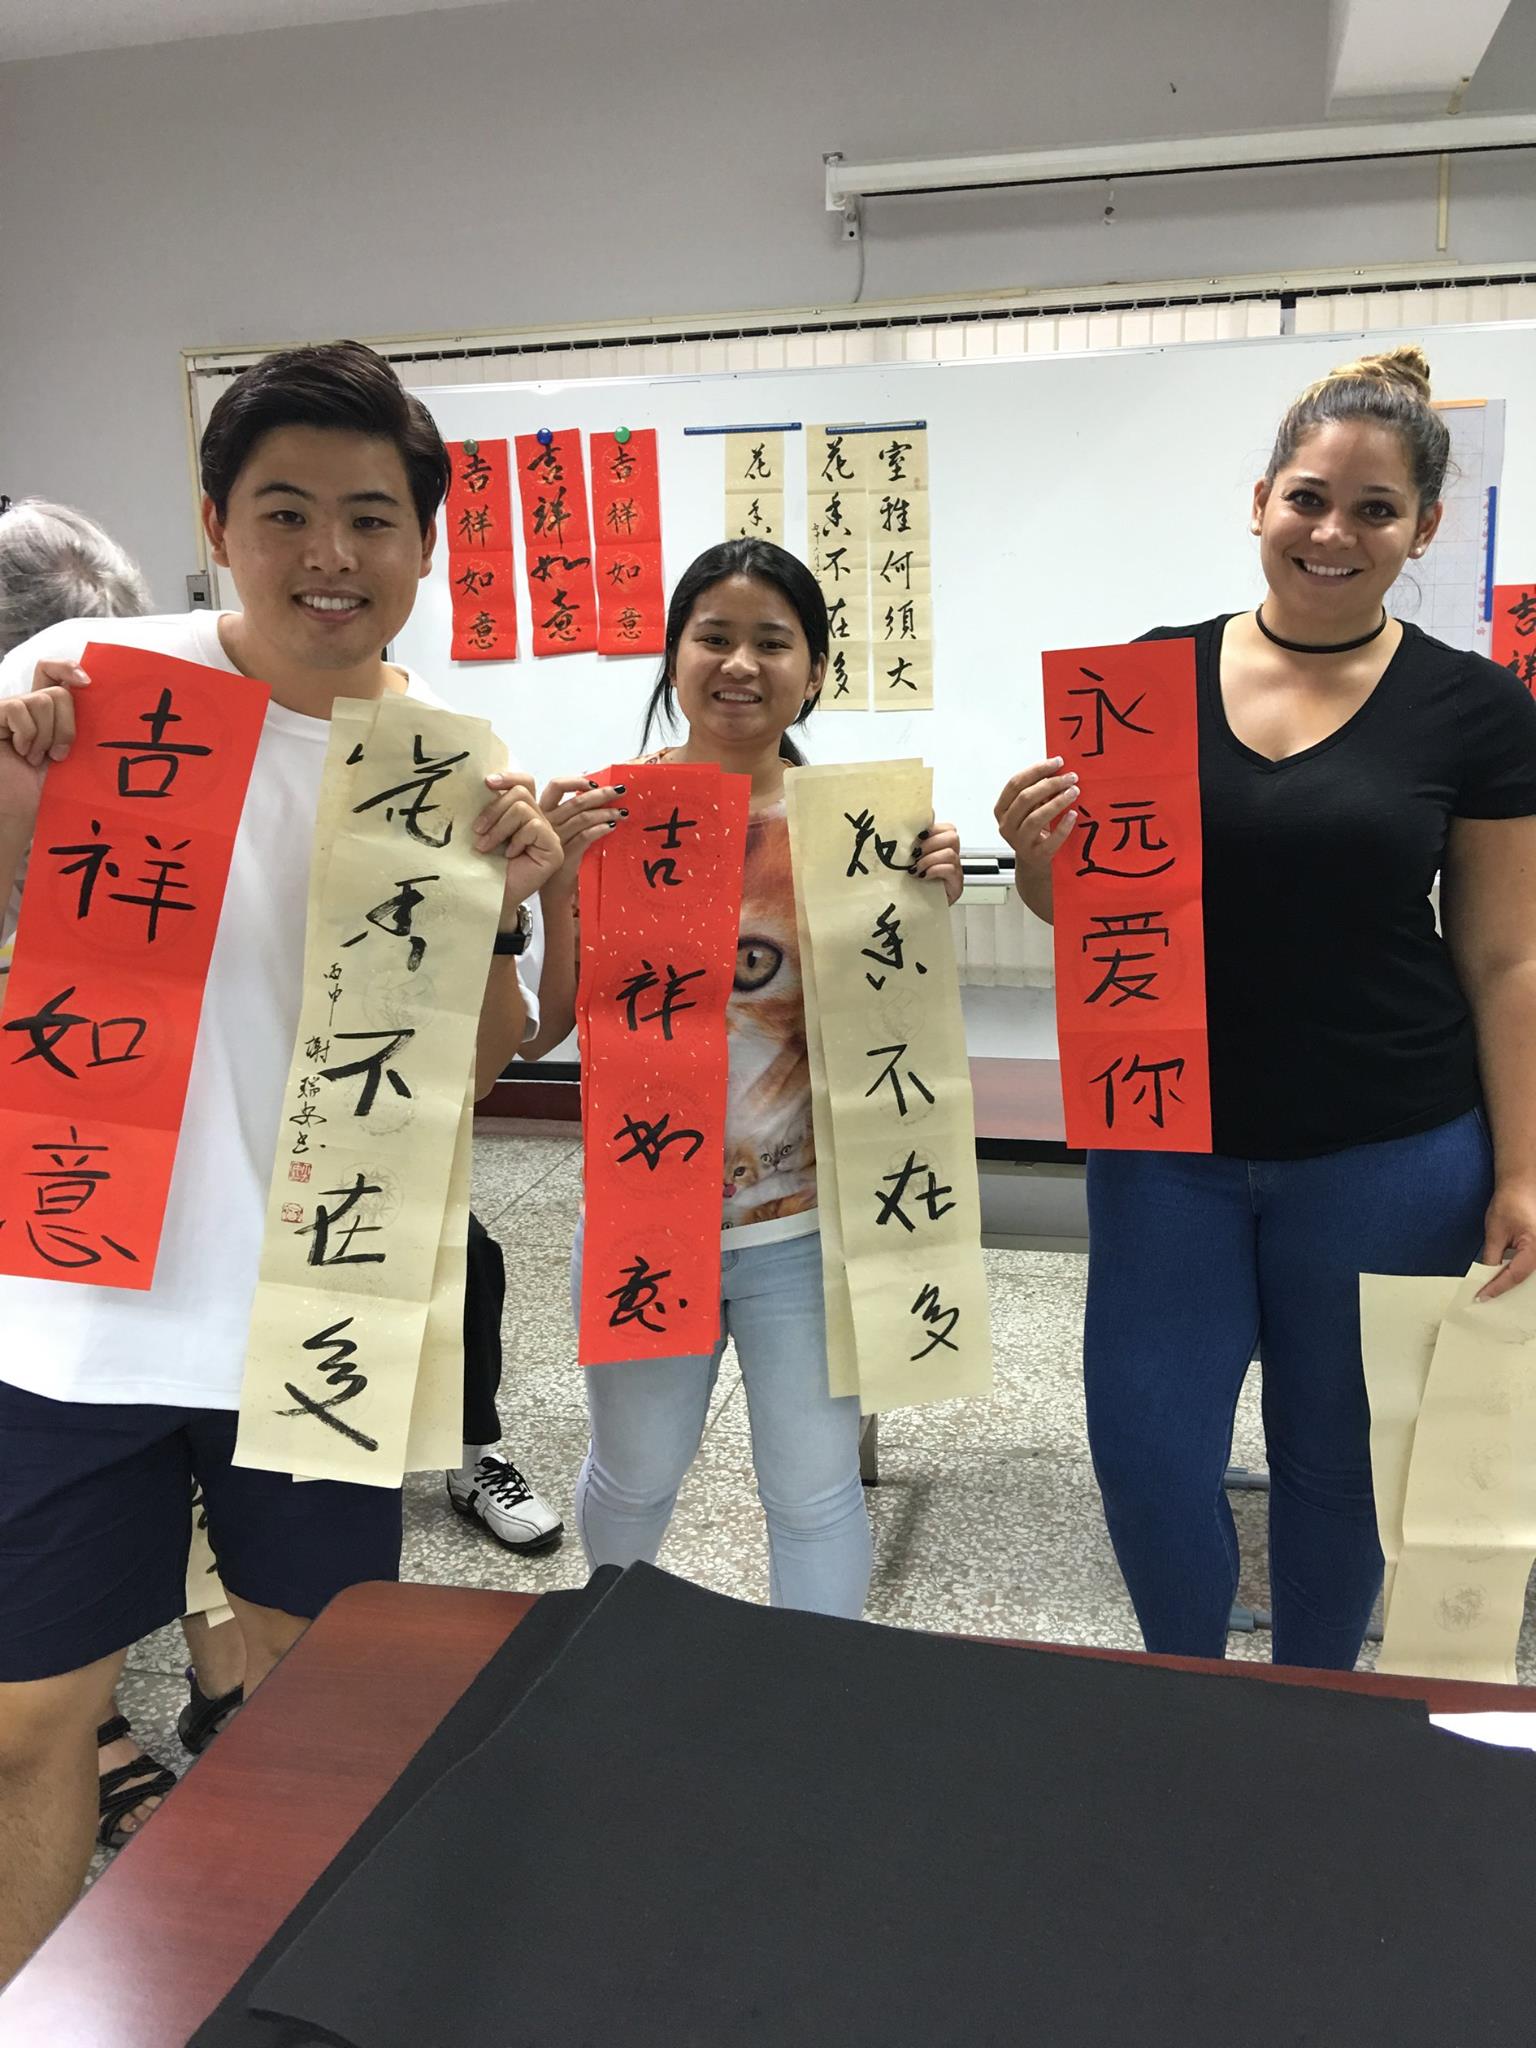 Taiwan students holding scrolls